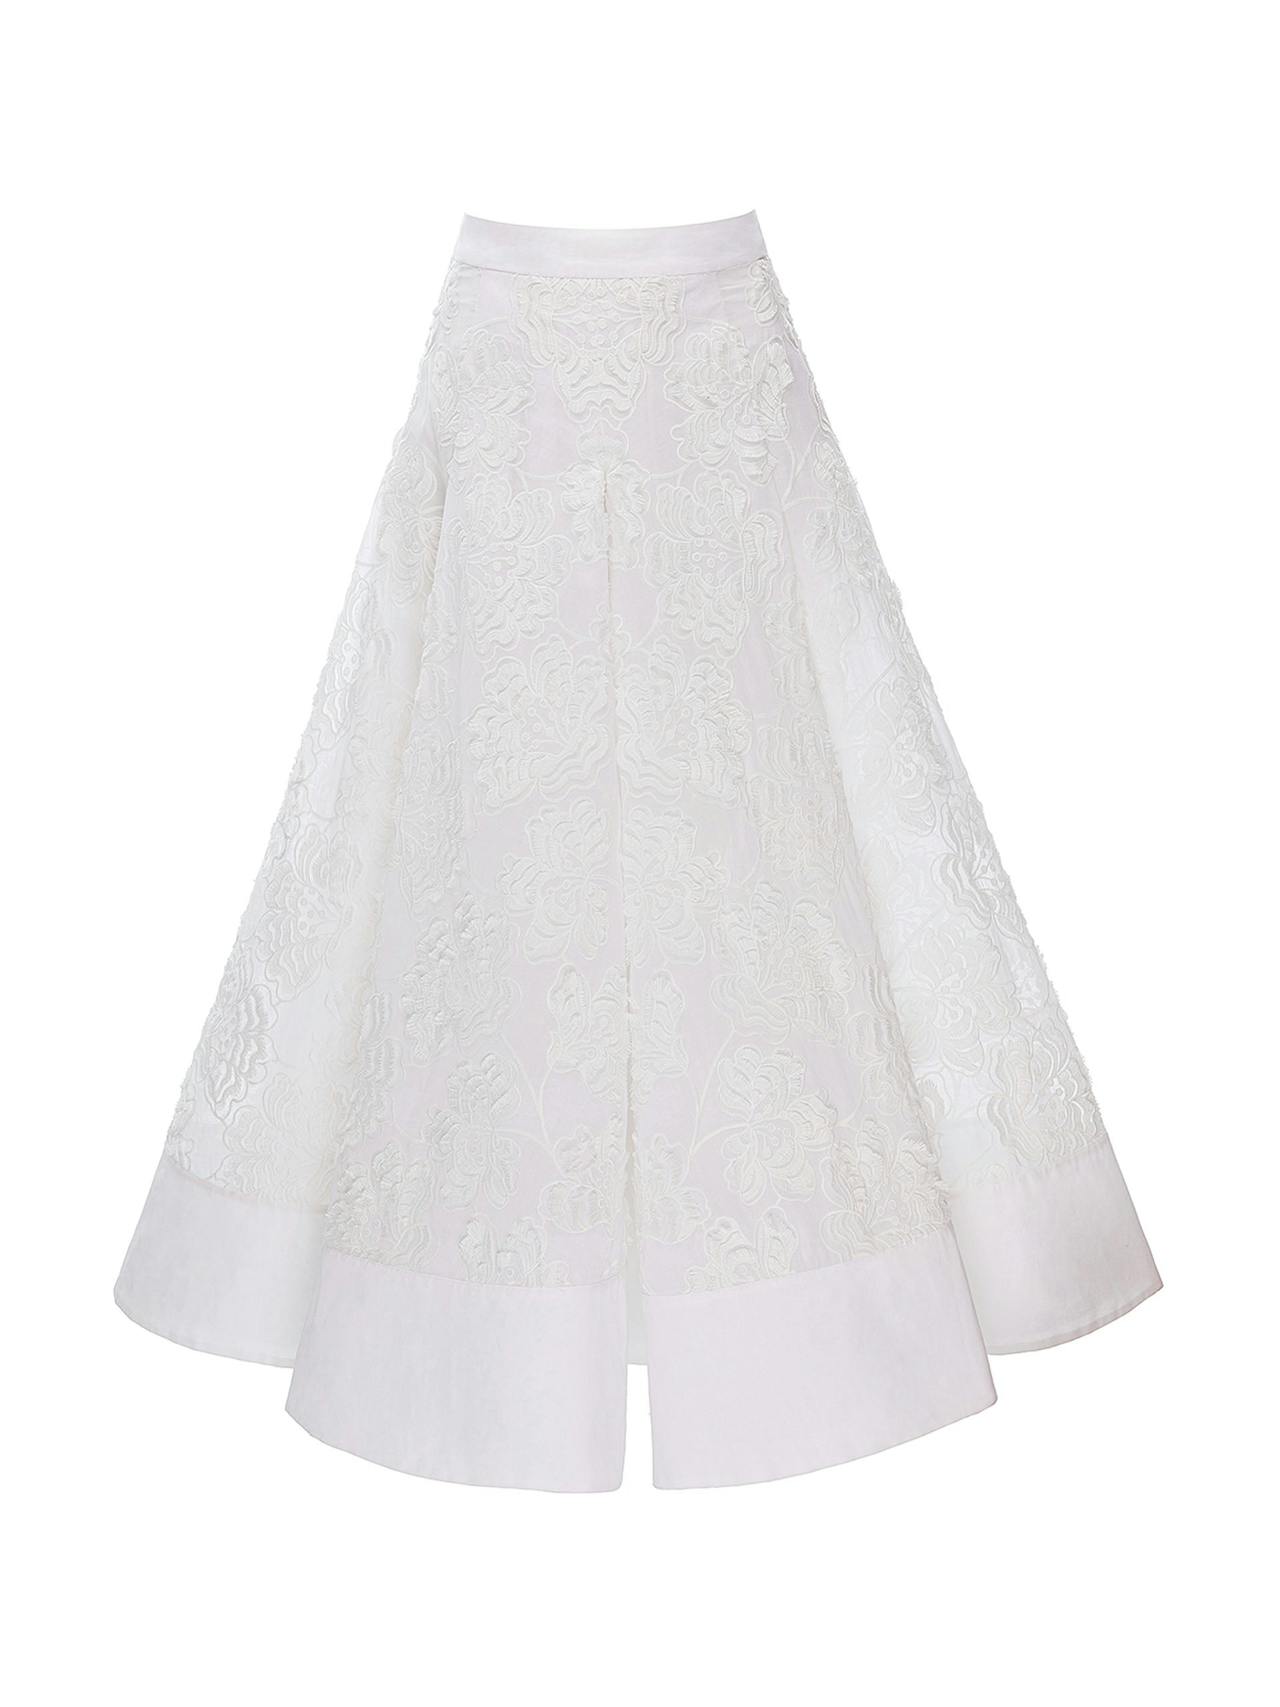 White embroidered cotton Rowena skirt